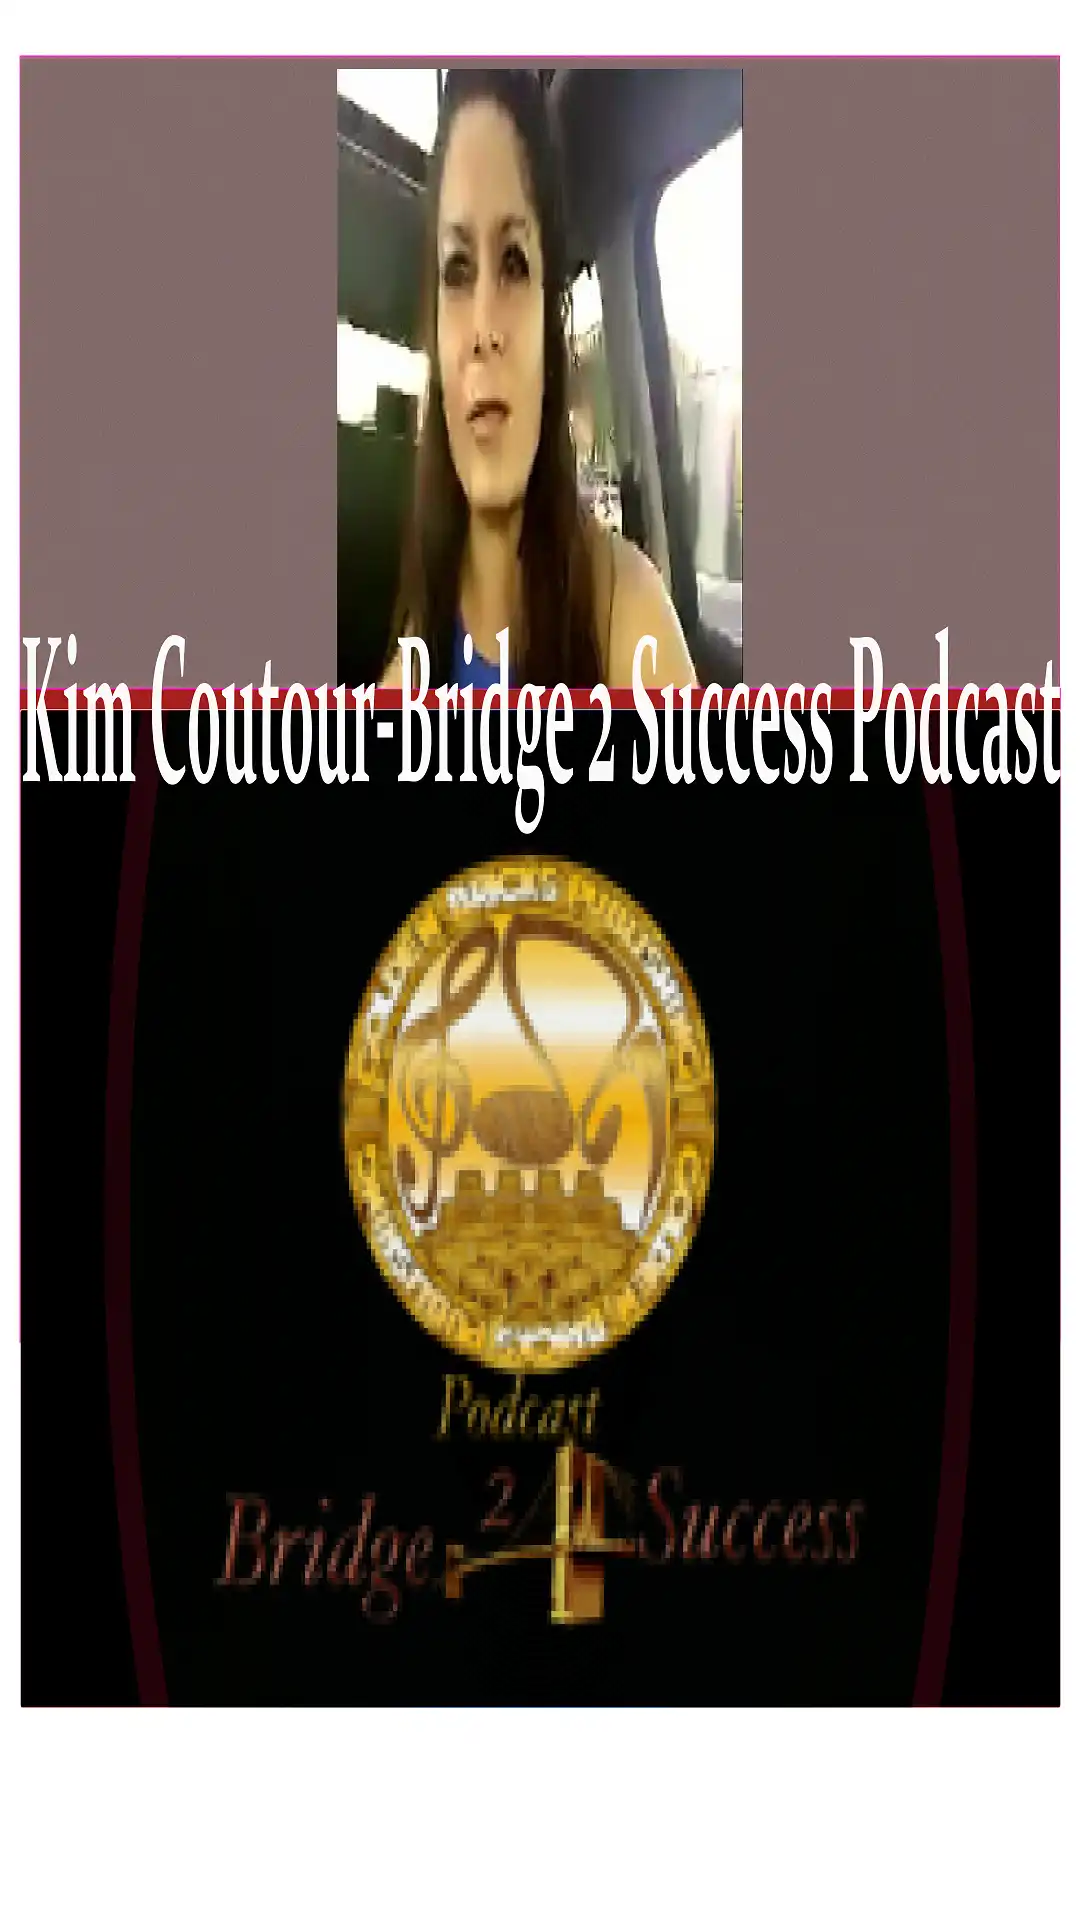 Kim Couture-Bridge 2 Success Podcast